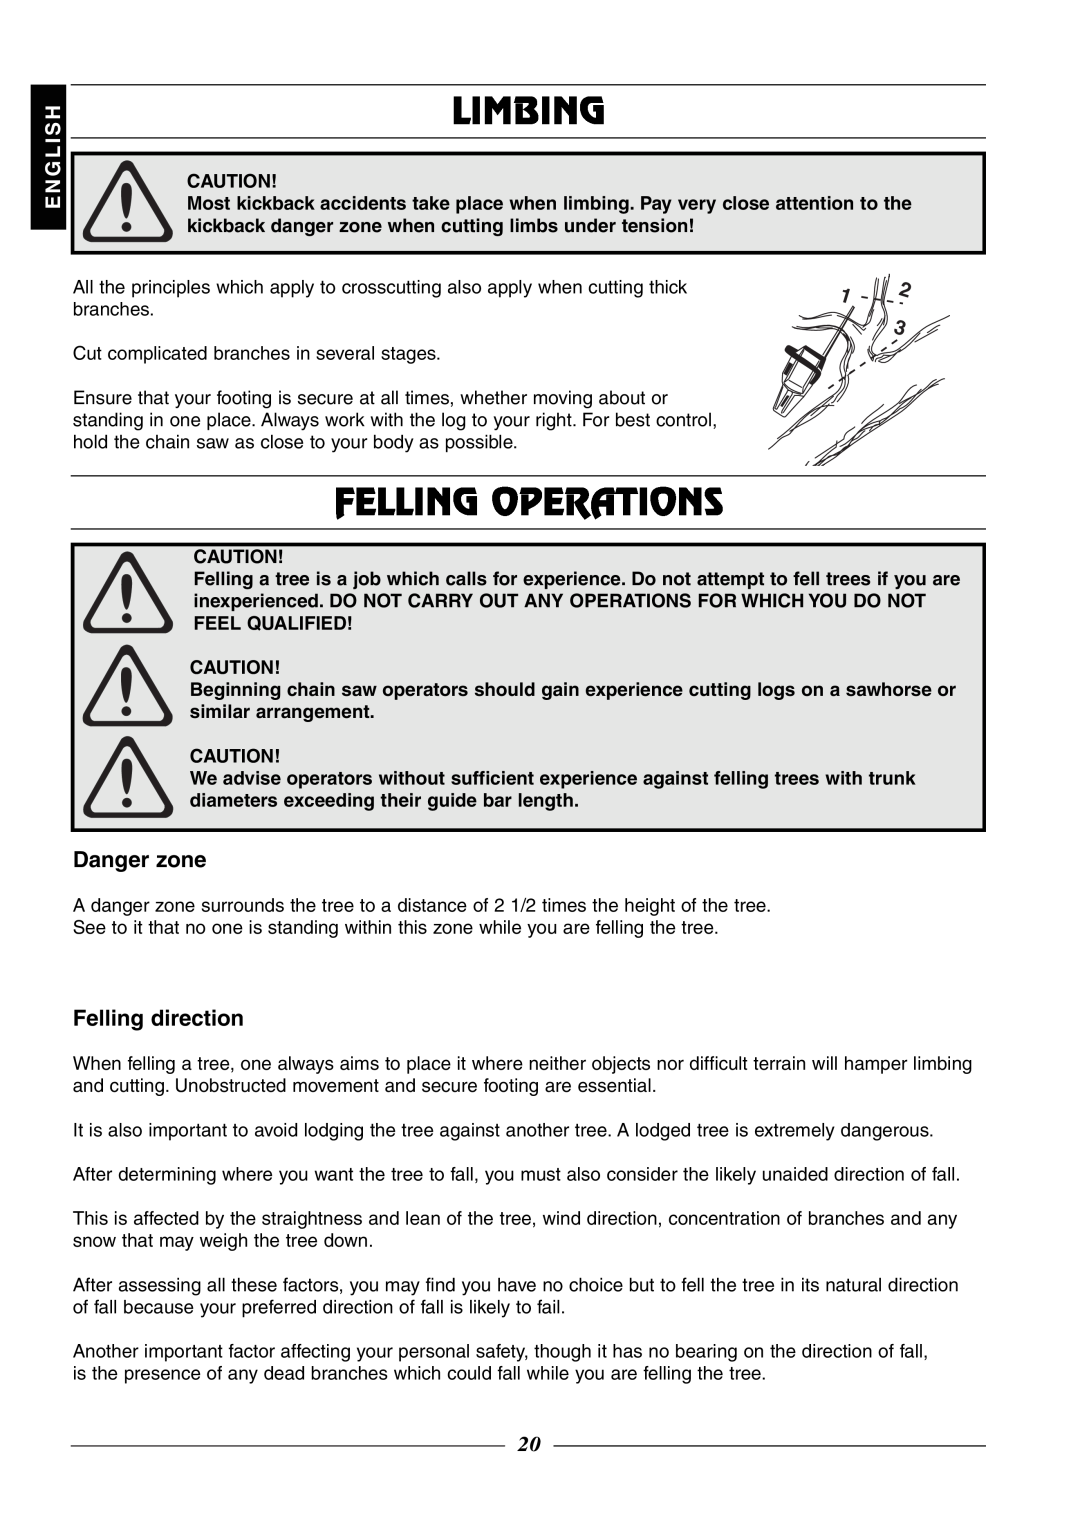 Husqvarna 315, 320 manual Limbing, Felling Operations, 12 3, Danger zone, Felling direction, E N G L I S H 